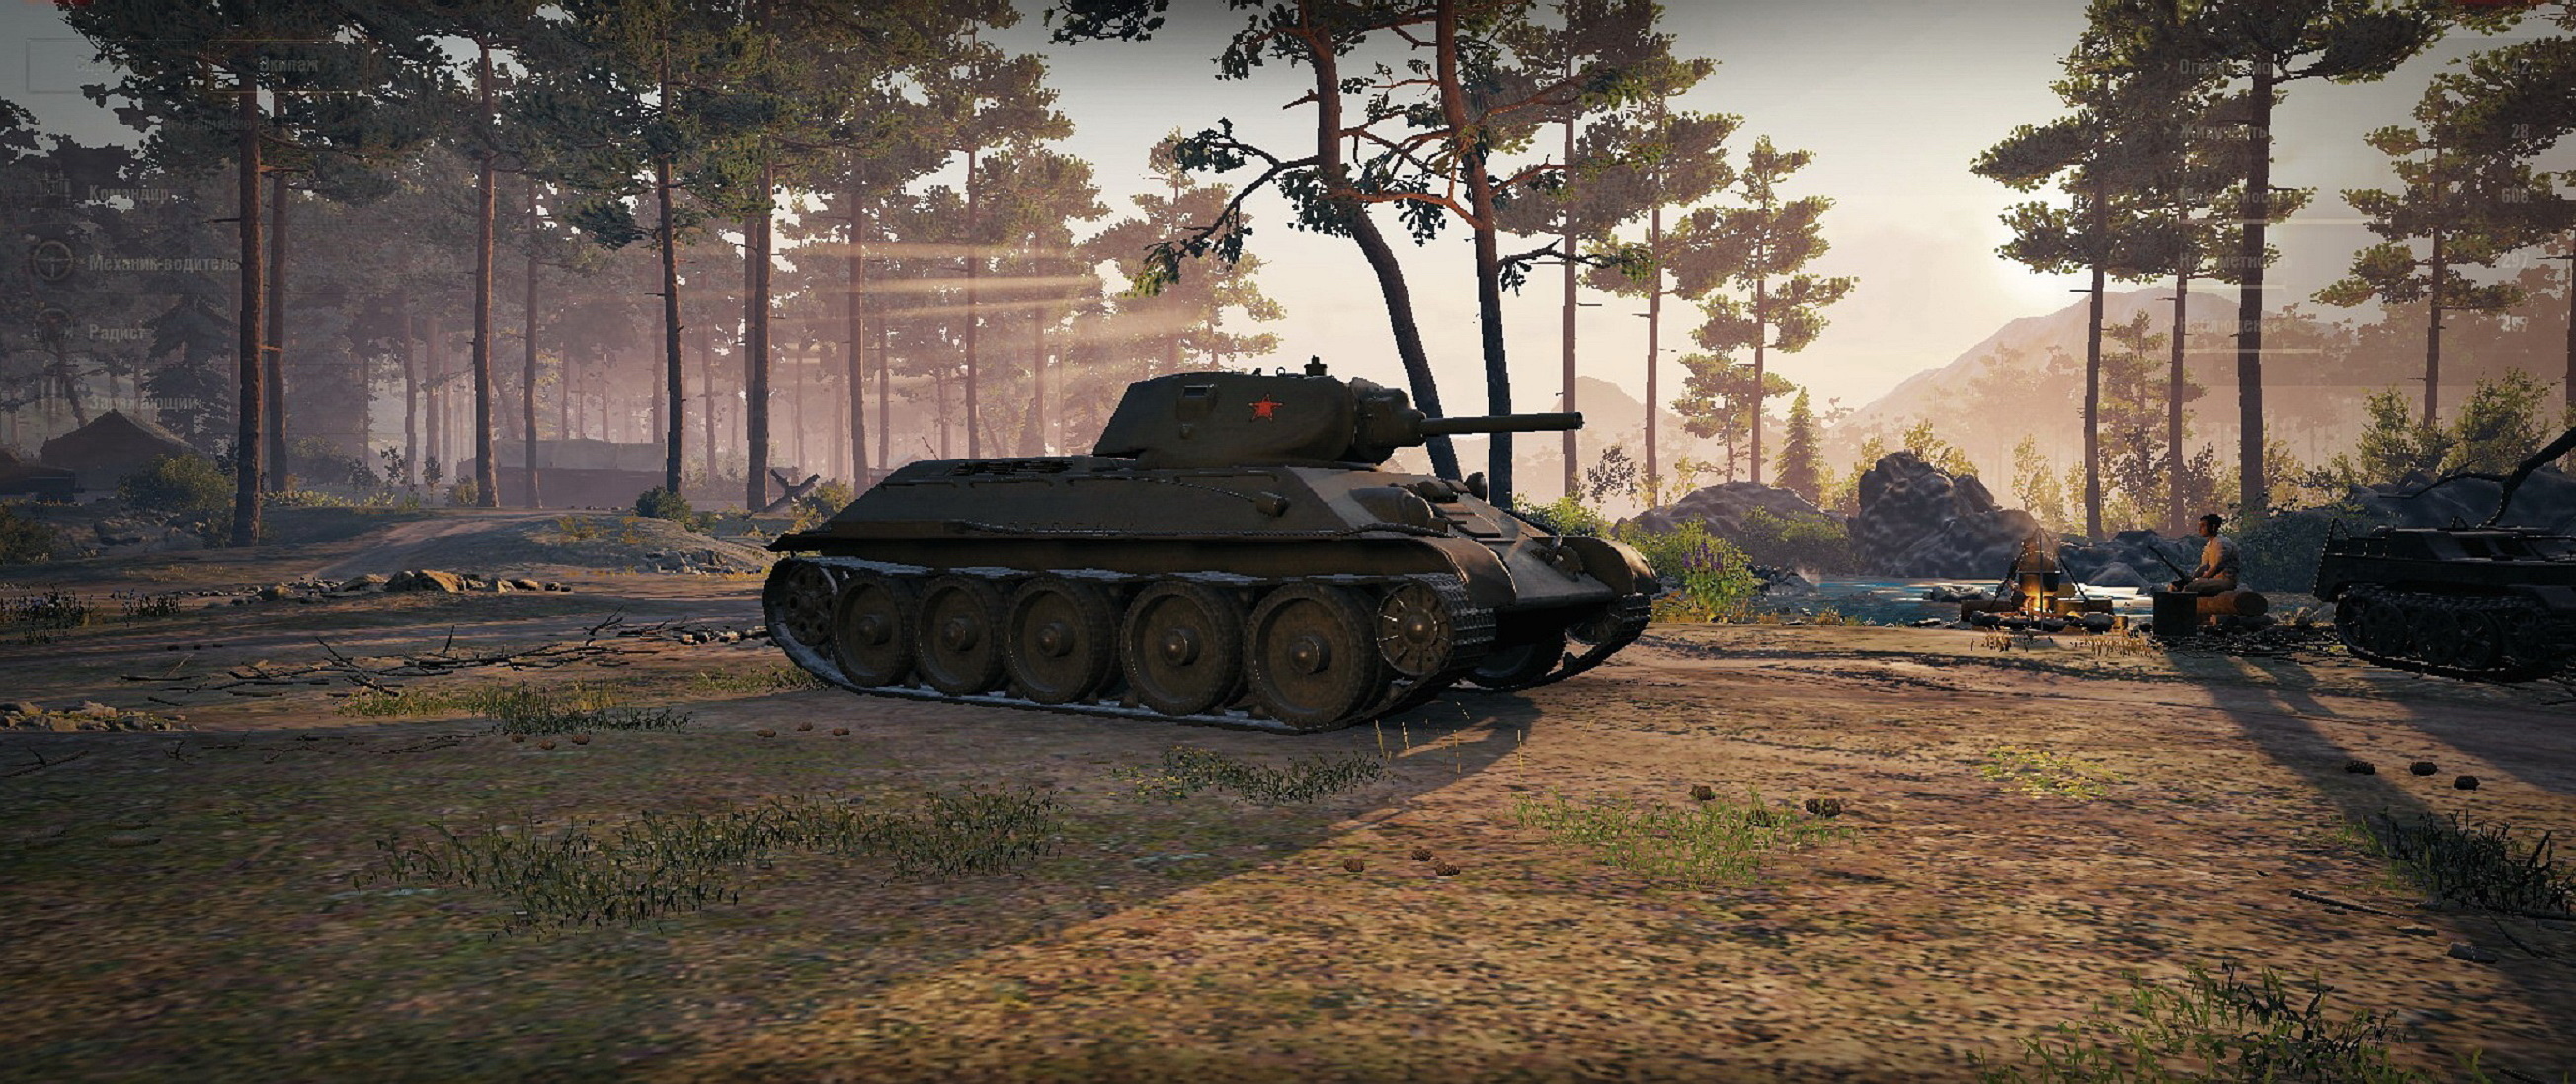 Игра танки 34. Танк т-34 ворлд оф танк. Танк т34 WOT. Т 34 76 ворлд оф танк. Т-34 танк СССР World of Tanks.